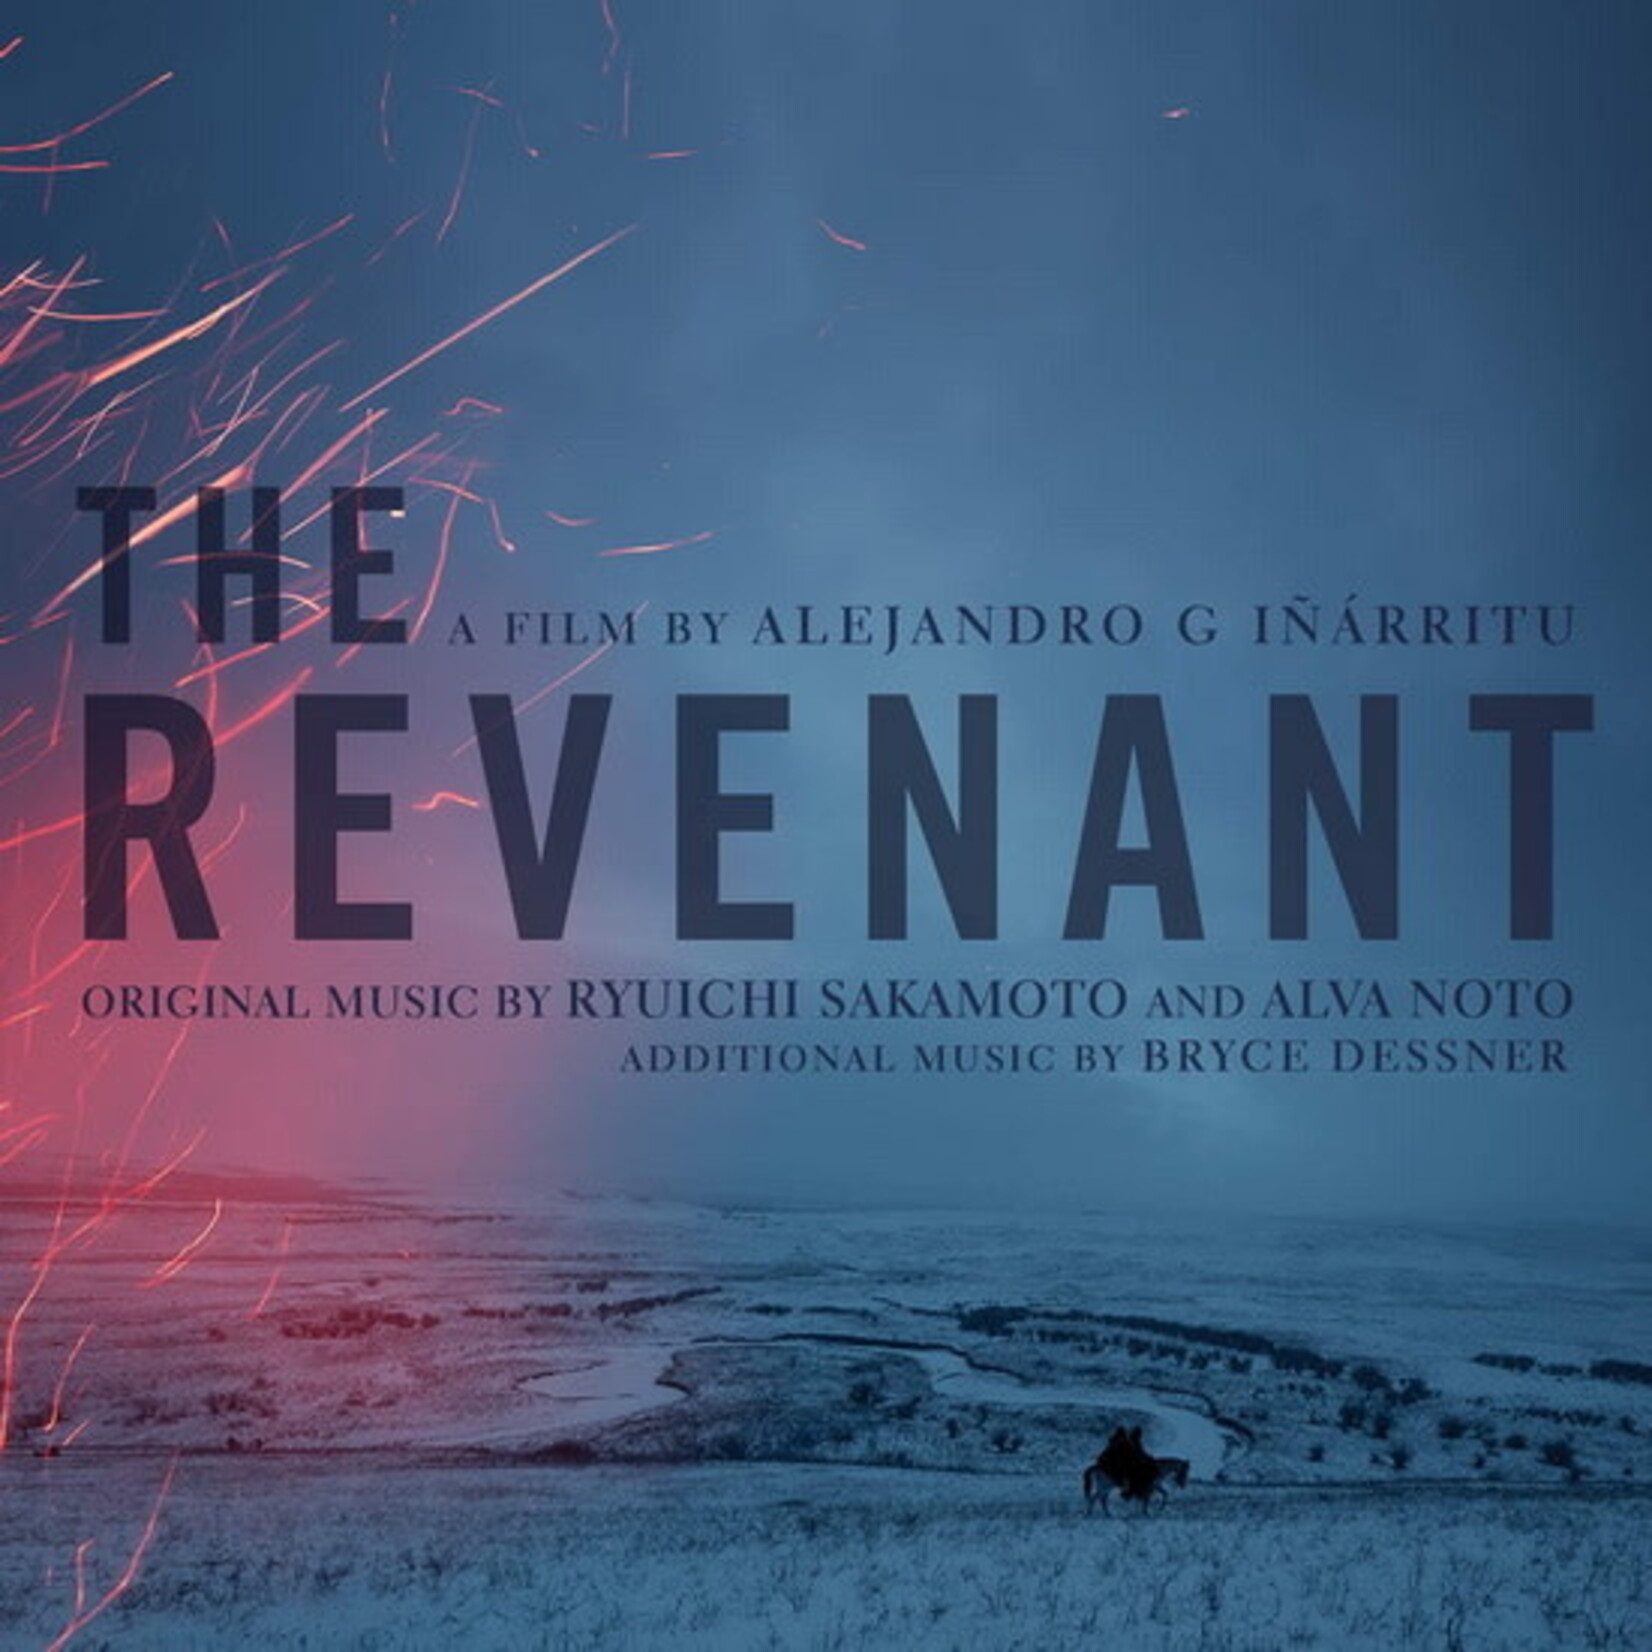 [New] Ryuichi, Alva Noto & Bryce Dessner Sakamoto - The Revenant - Original Motion Picture (2LP, soundtrack)